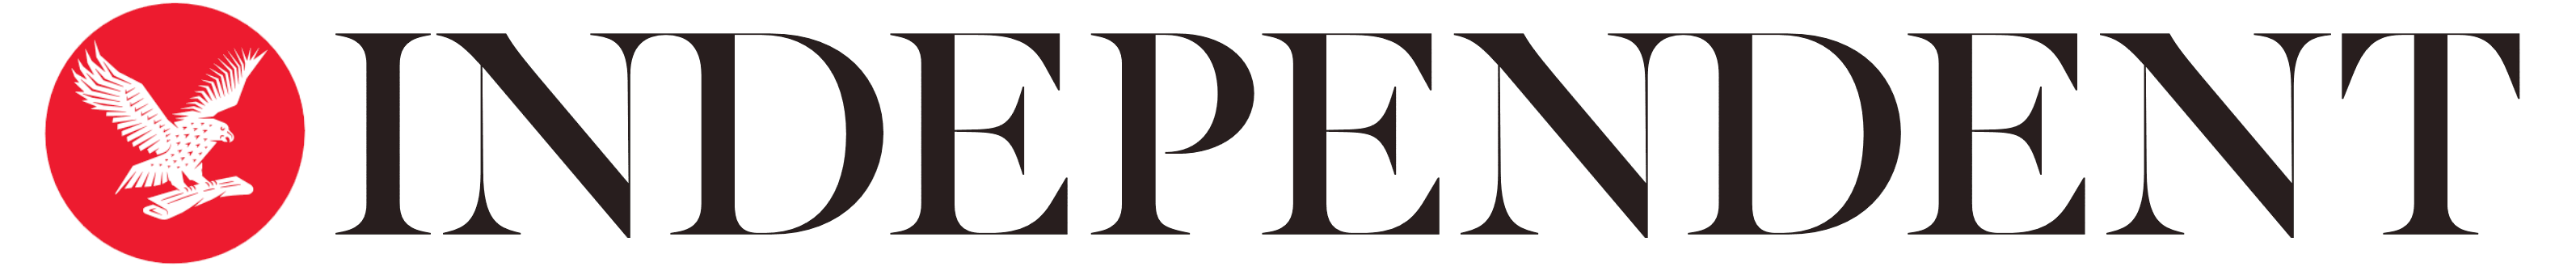 The Independent logo, logotype